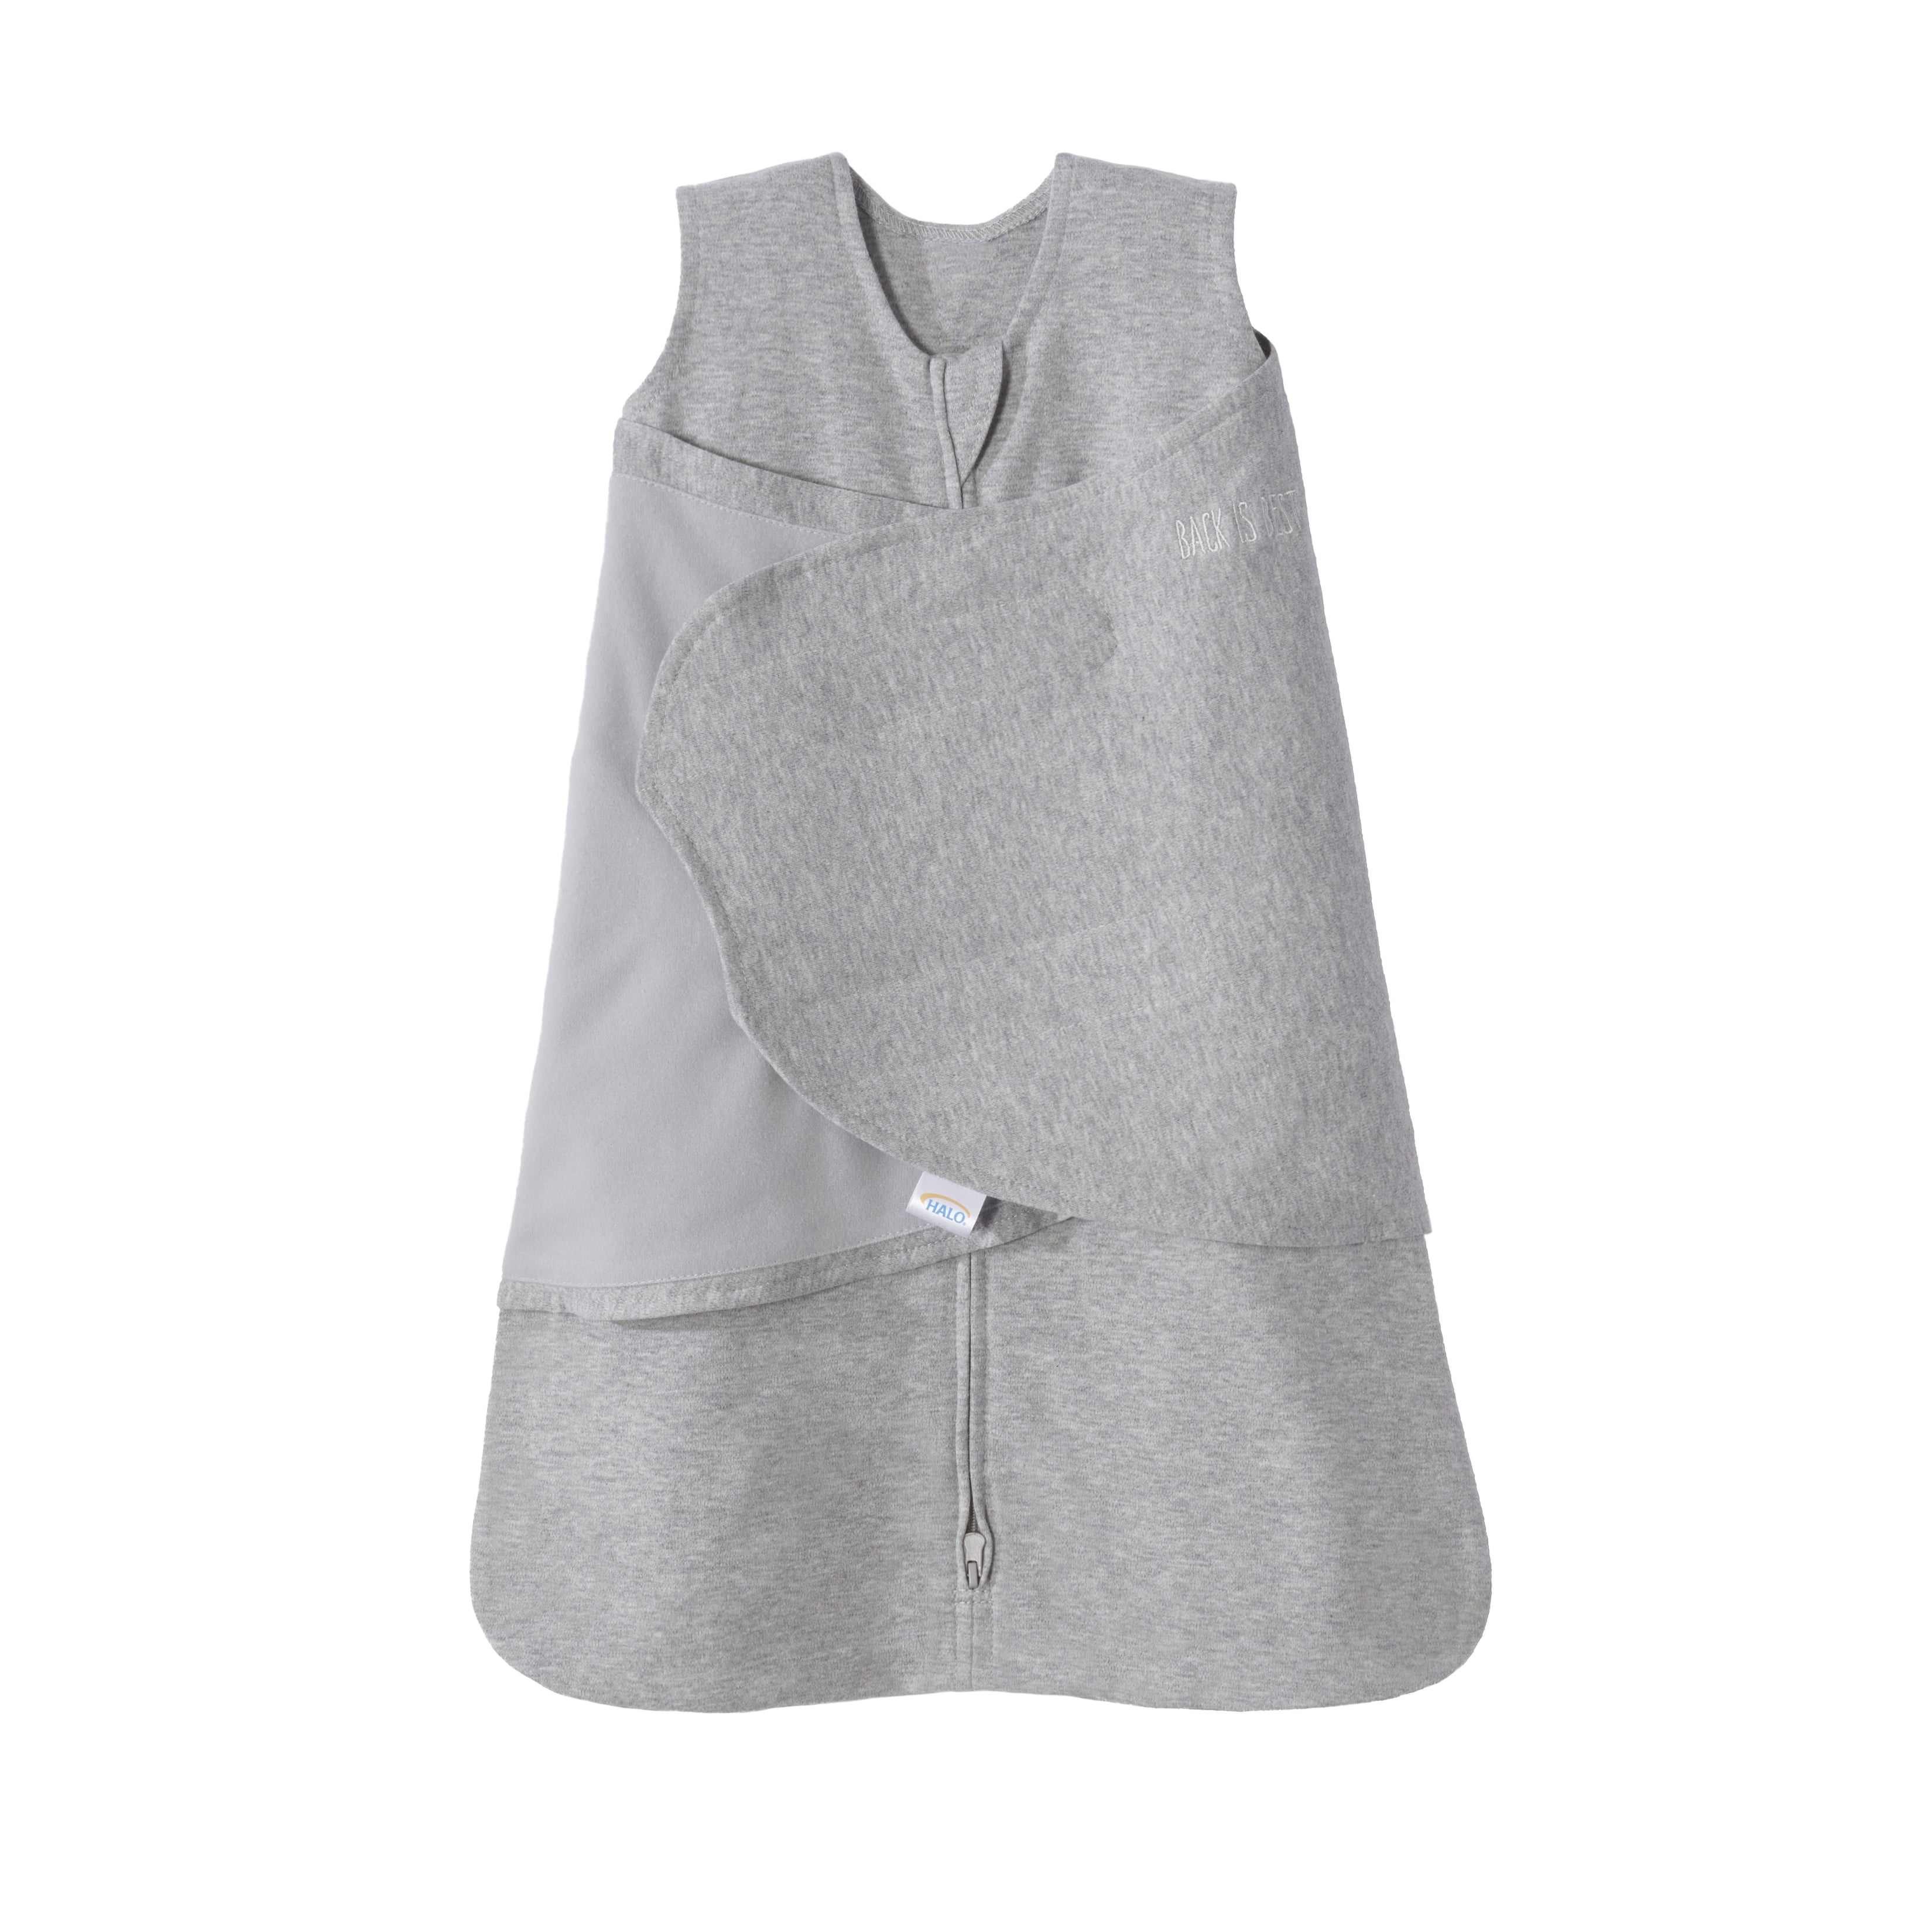 Halo 100% Cotton Muslin Sleepsack Wearable Blanket, Grey Tree Leaf, Small